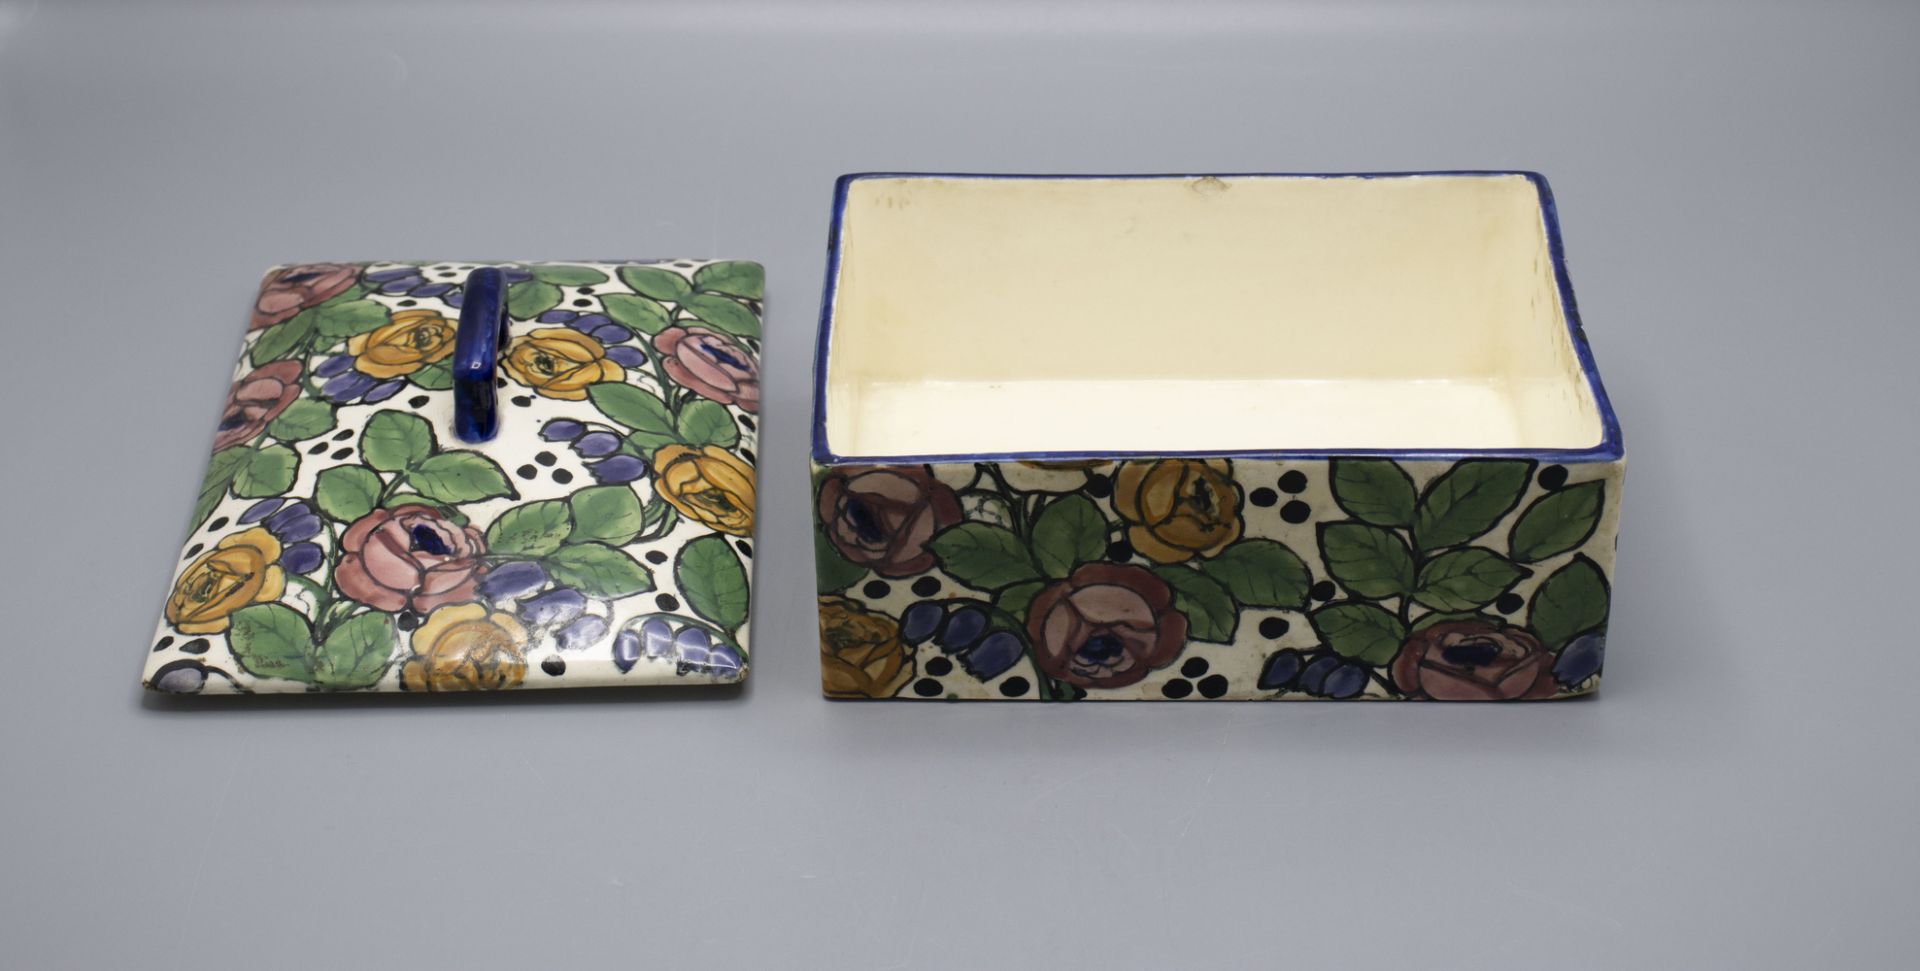 Keramik Deckeldose / A ceramic lidded box, um 1900 - Bild 3 aus 4